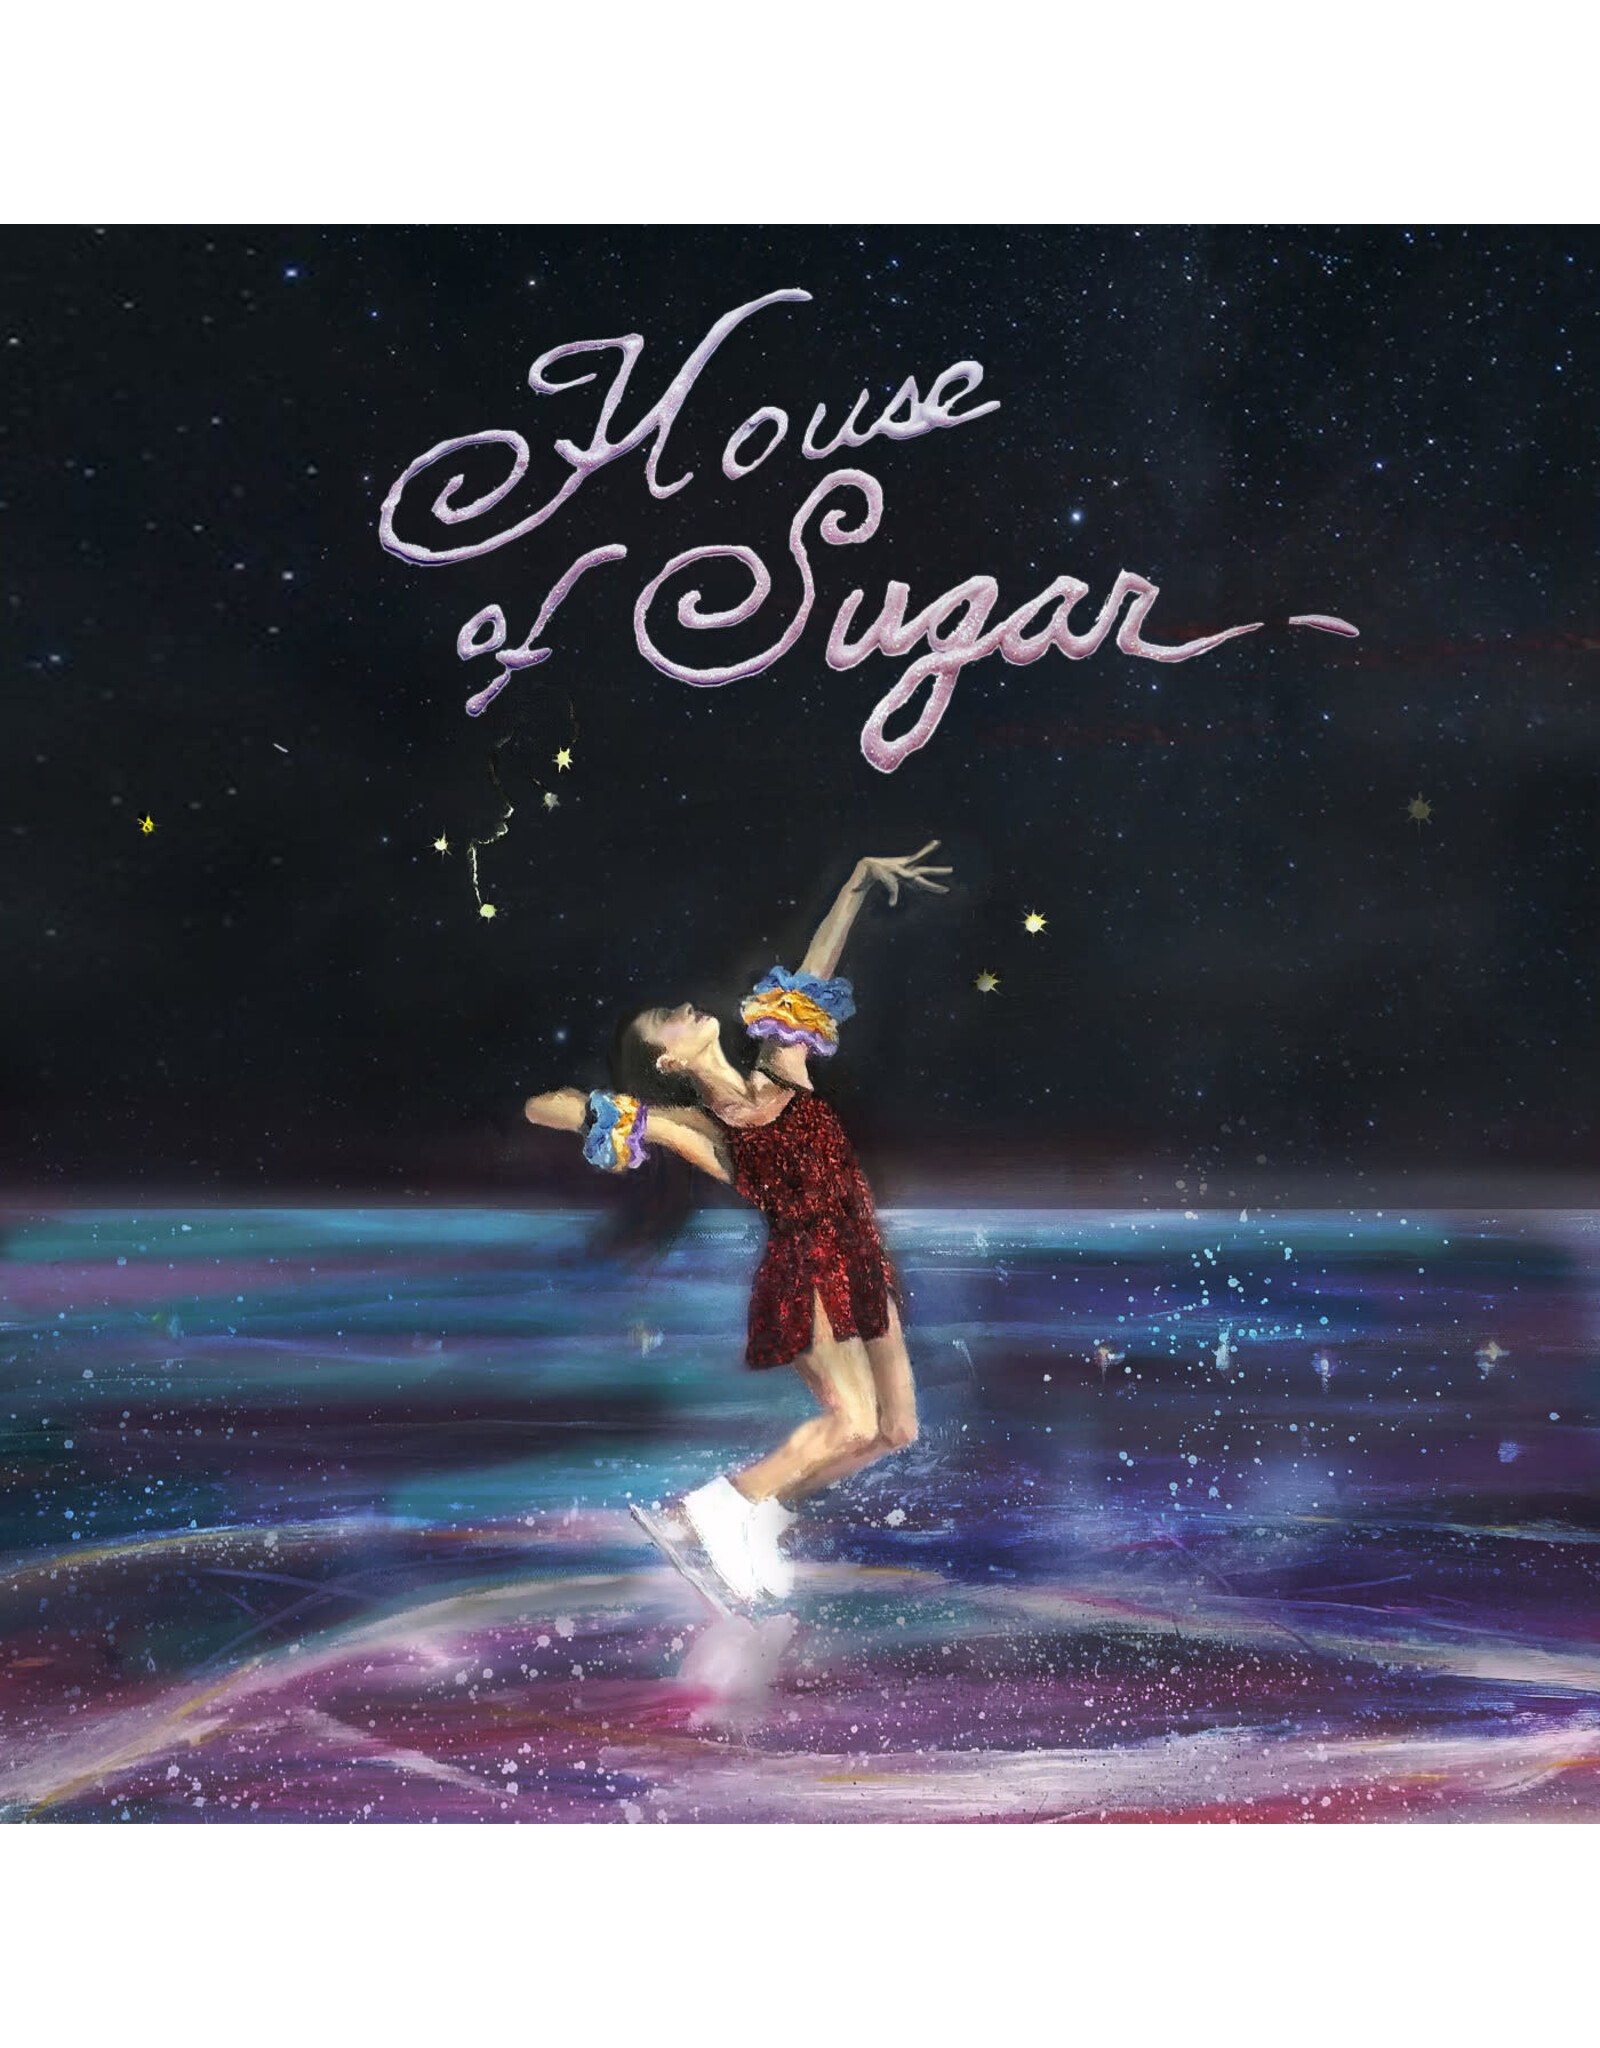 Domino Alex G: House of Sugar LP